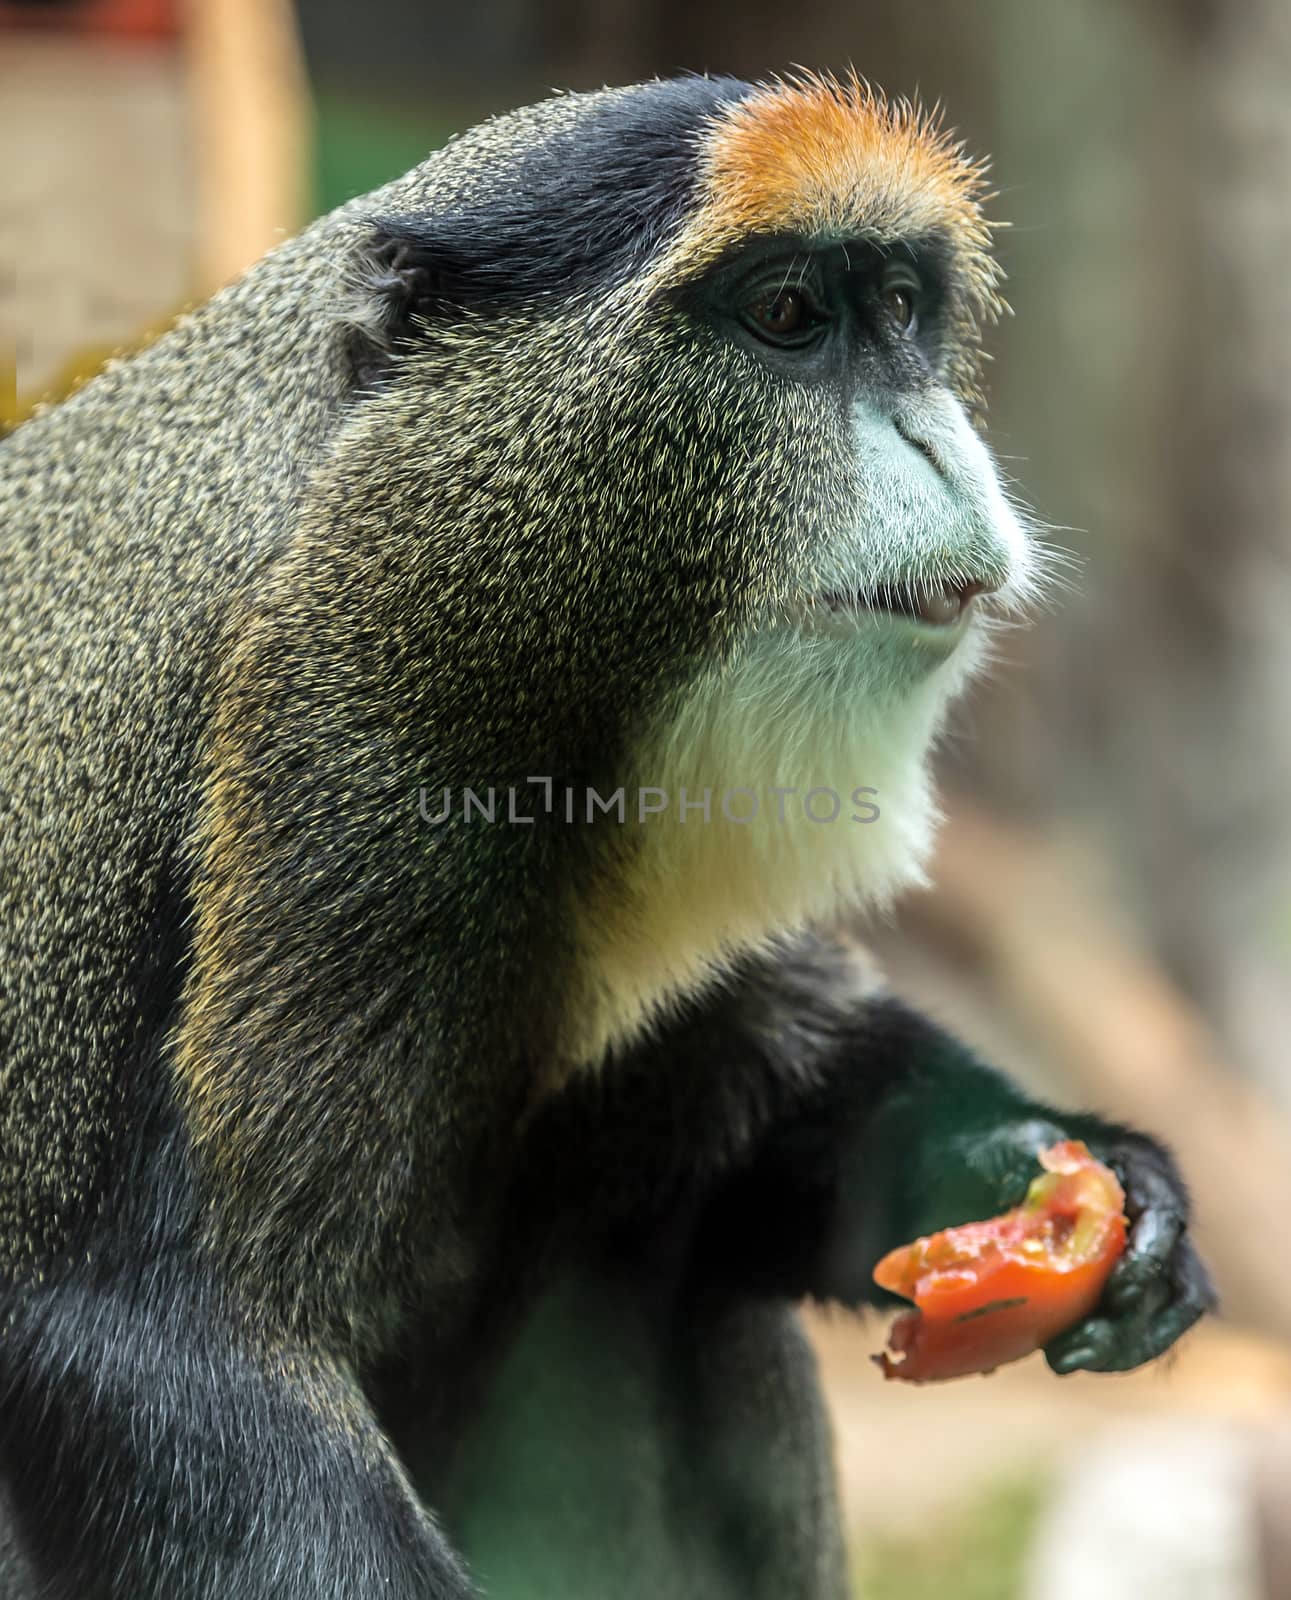 Male De Brazza's monkey primates Adult Portrait by Vladyslav